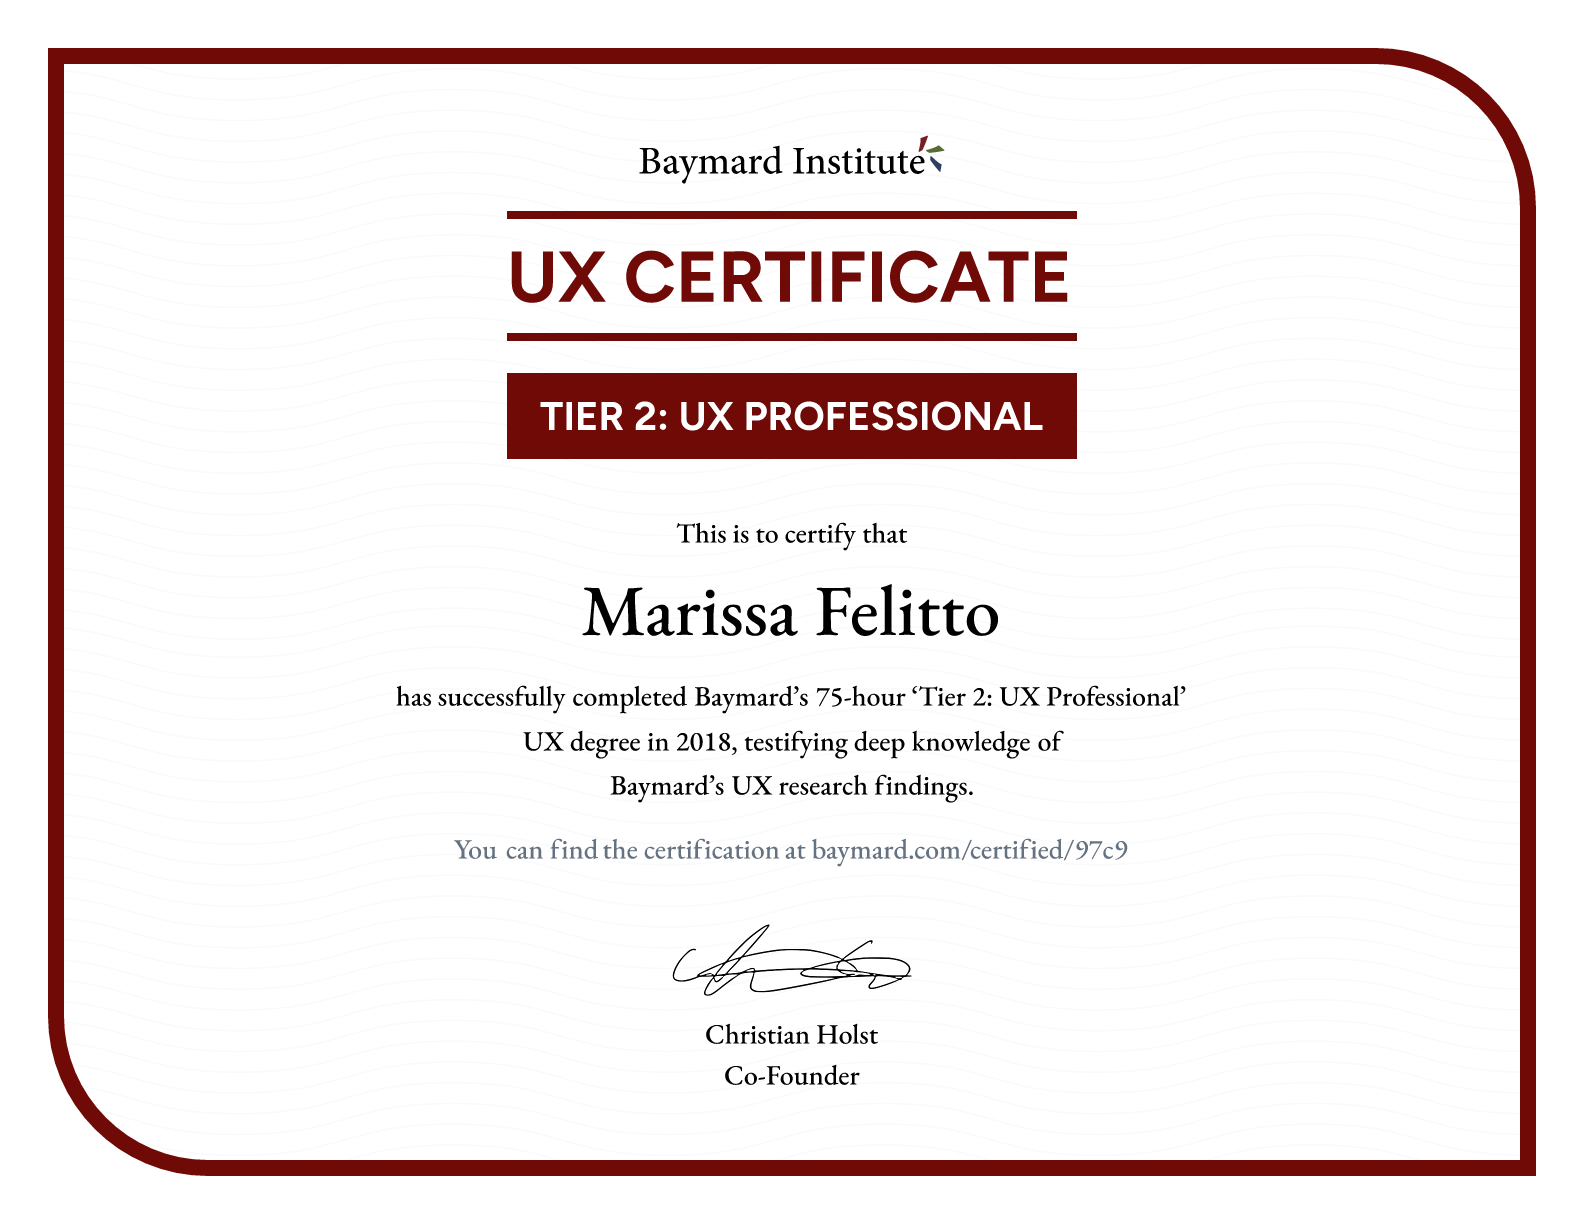 Marissa Felitto’s certificate